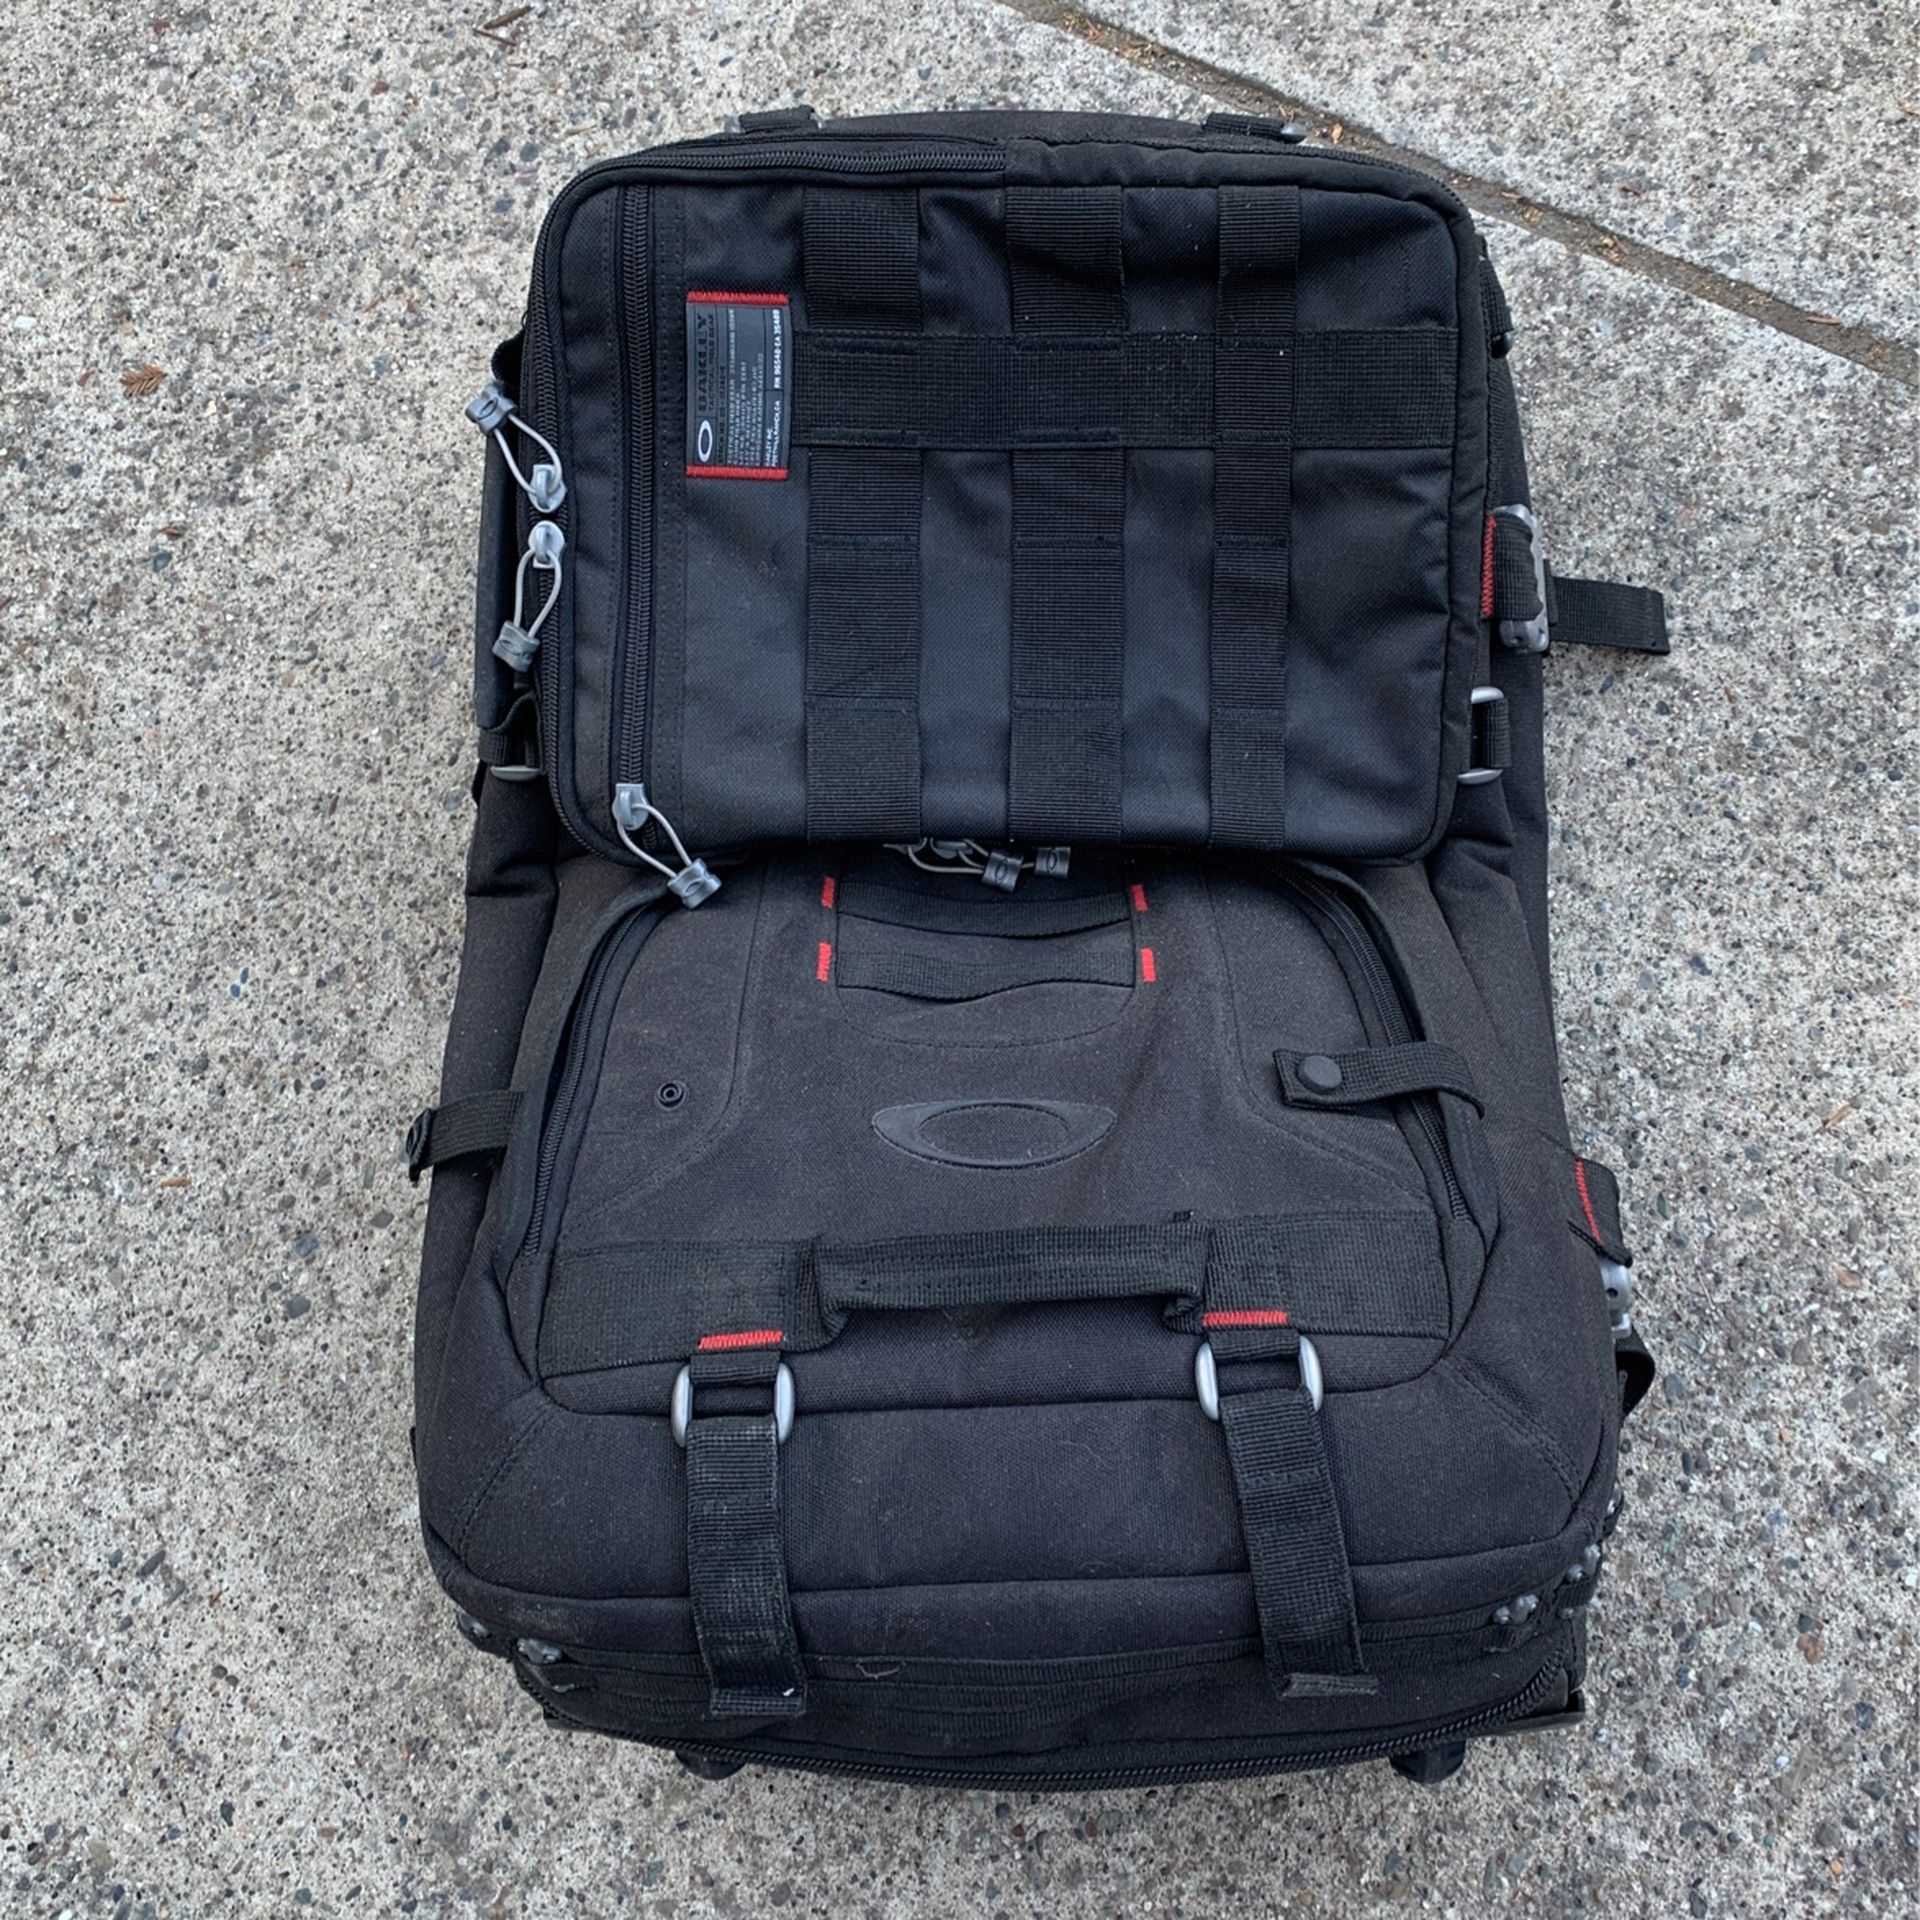 Oakley Tactical Field Gear Roller Luggage for Sale in Morgan Hill, CA ...